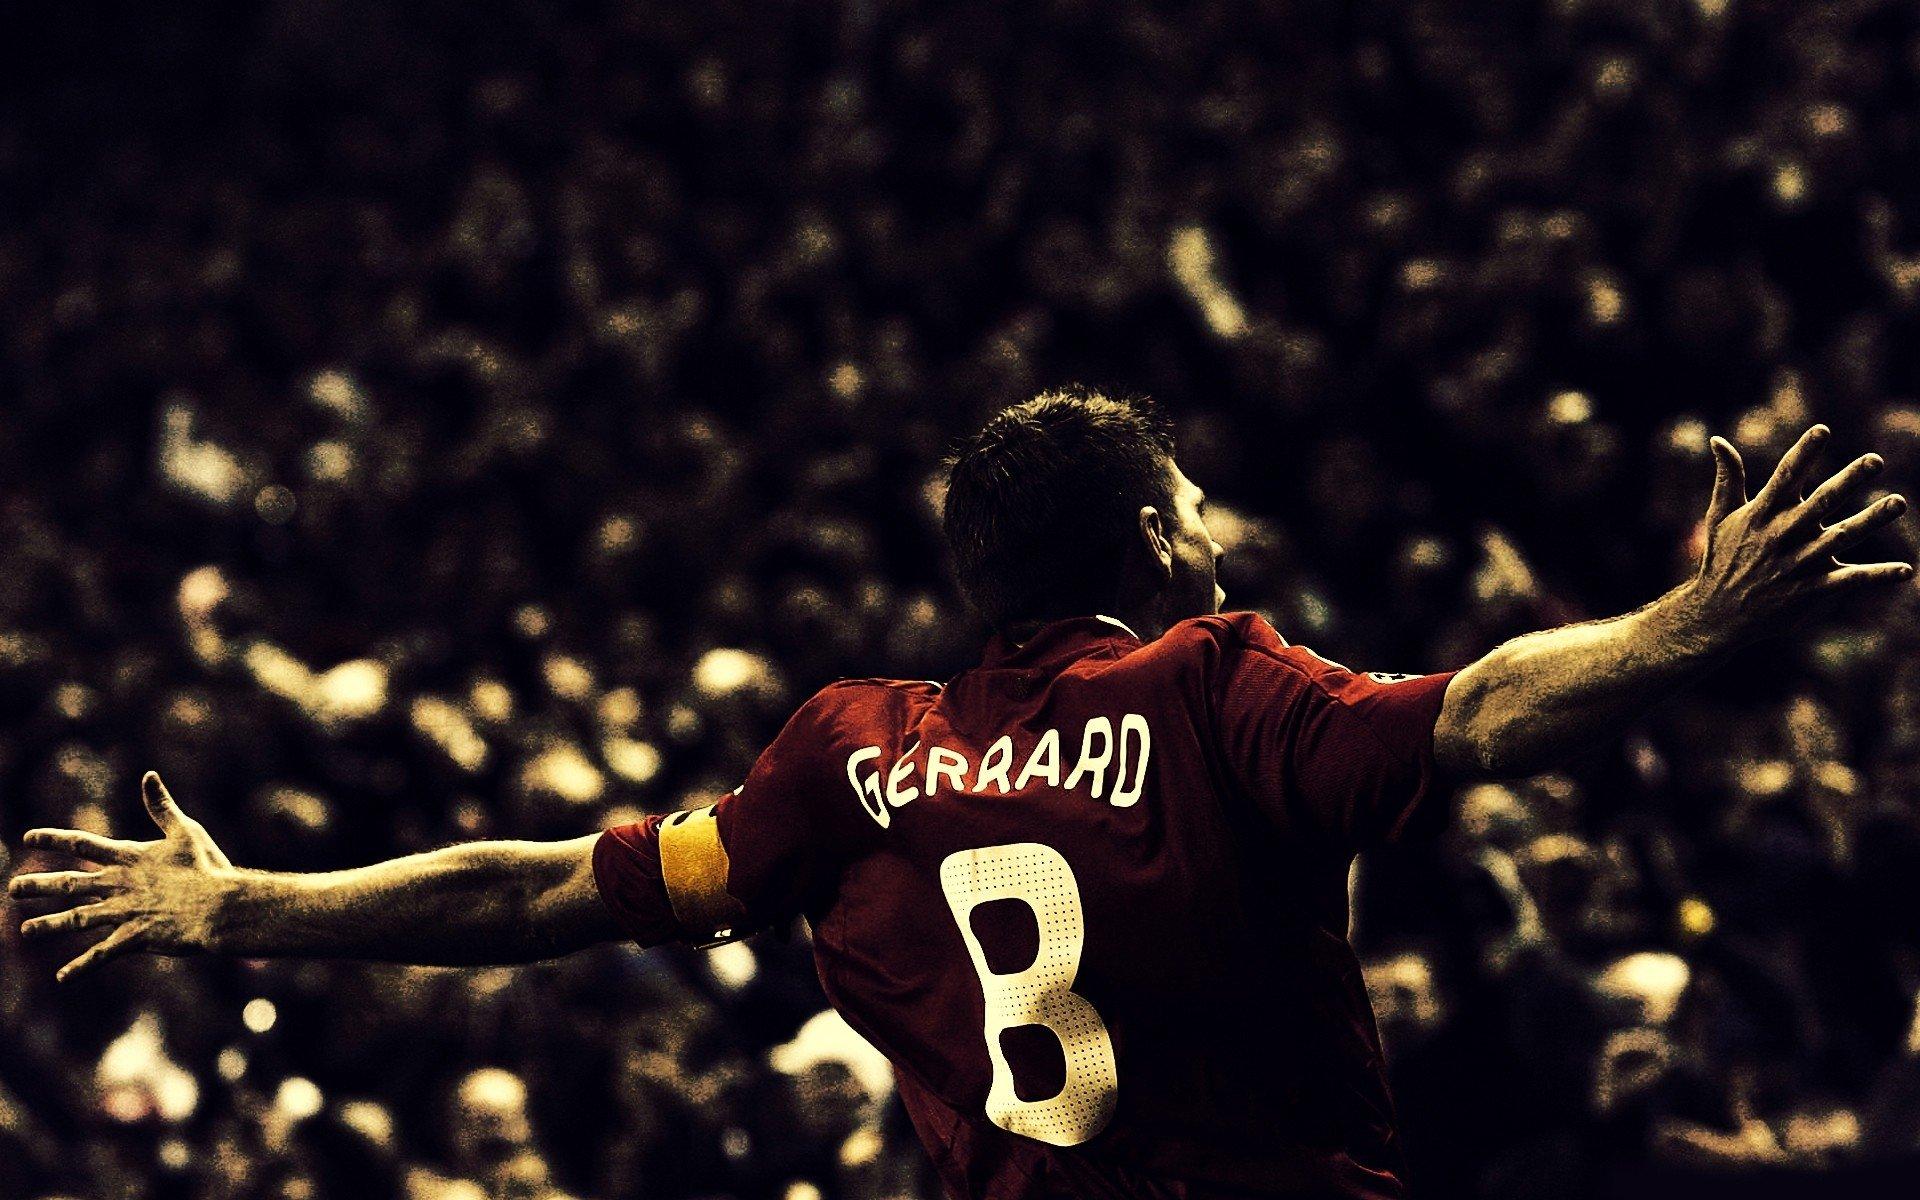 Steven Gerrard HD Wallpaper and Background Image